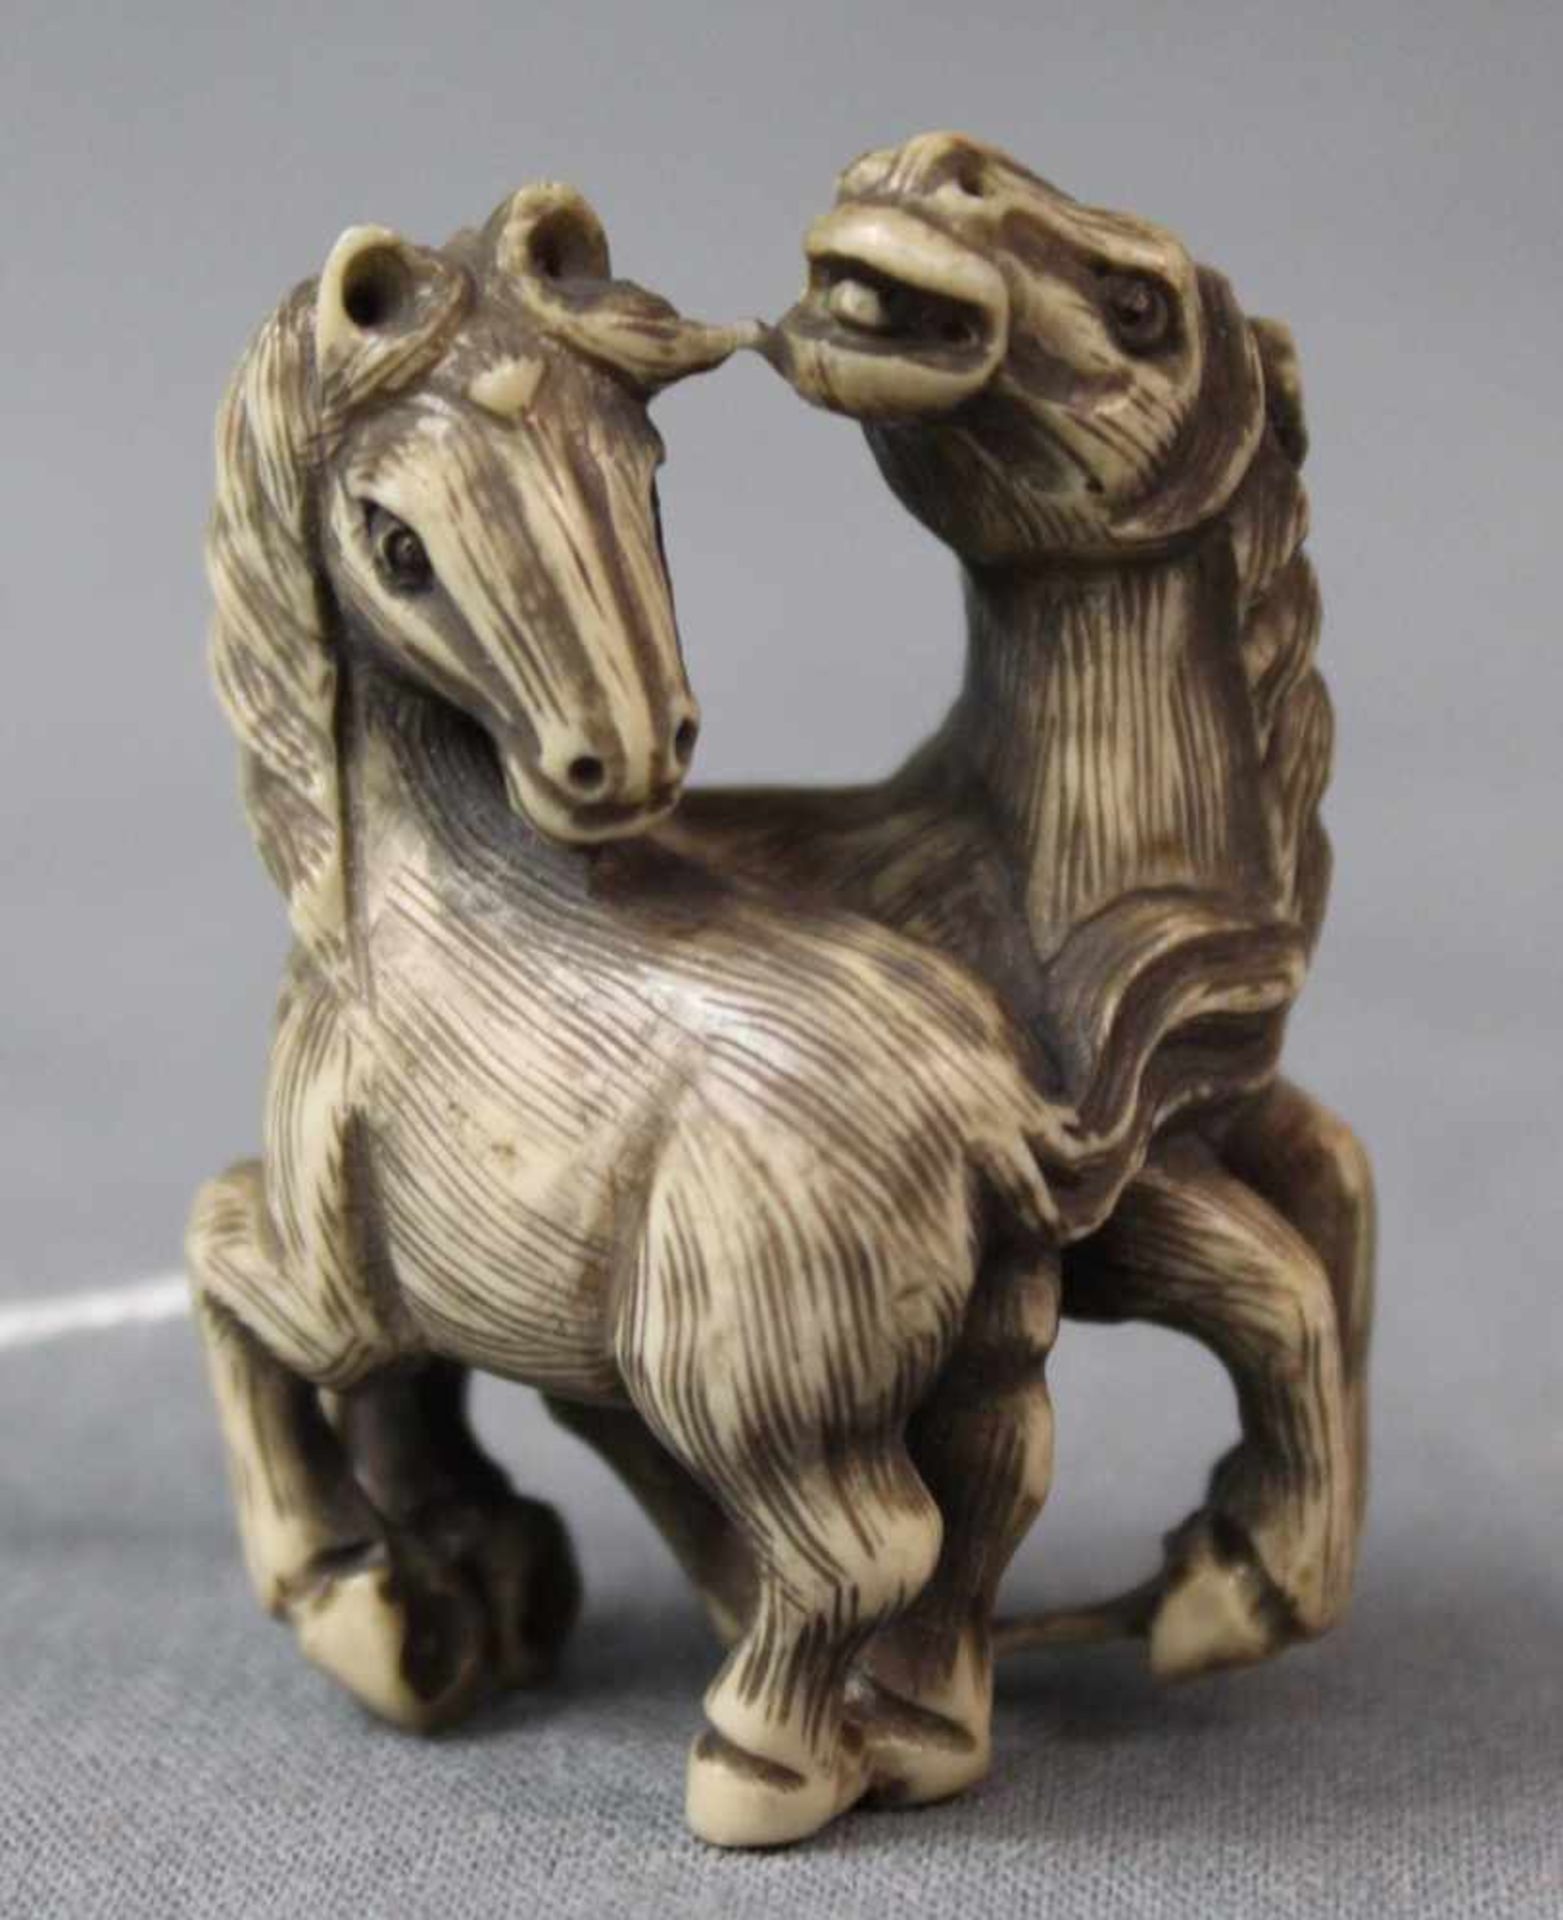 Netsuke. 2 Misaki Pferde. Geschnitzt. Japan, wohl Meiji - Zeit 1869 - 1912. 51 mm hoch. Unten